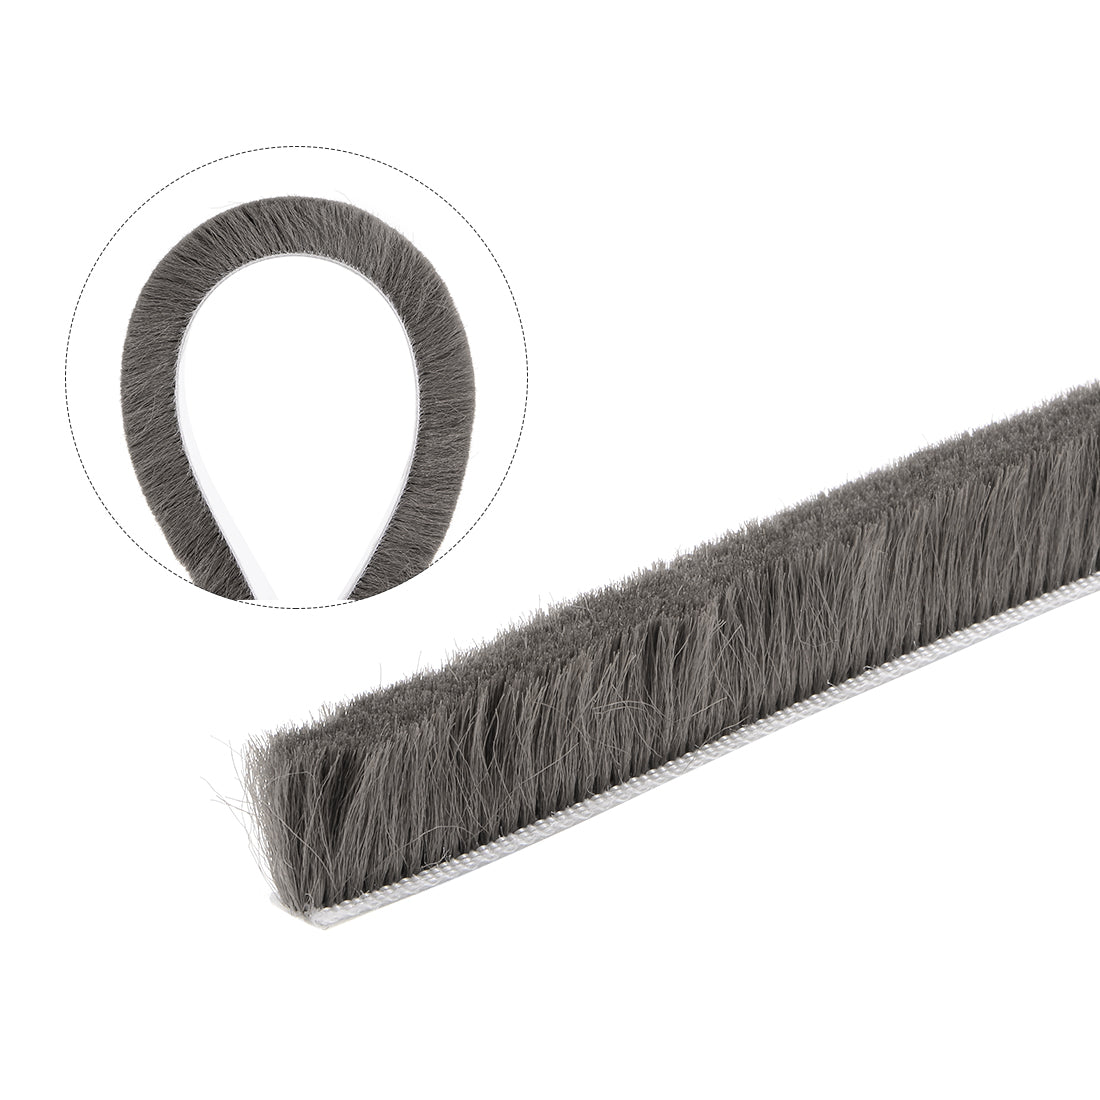 Uxcell Uxcell Brush Weather Stripping,Adhesive Felt Door Seal Strip Pile Weatherstrip Door Sweep Brush for Door Window 590.6Inch L x 0.6Inch W(15000mm x 15mm)Brown